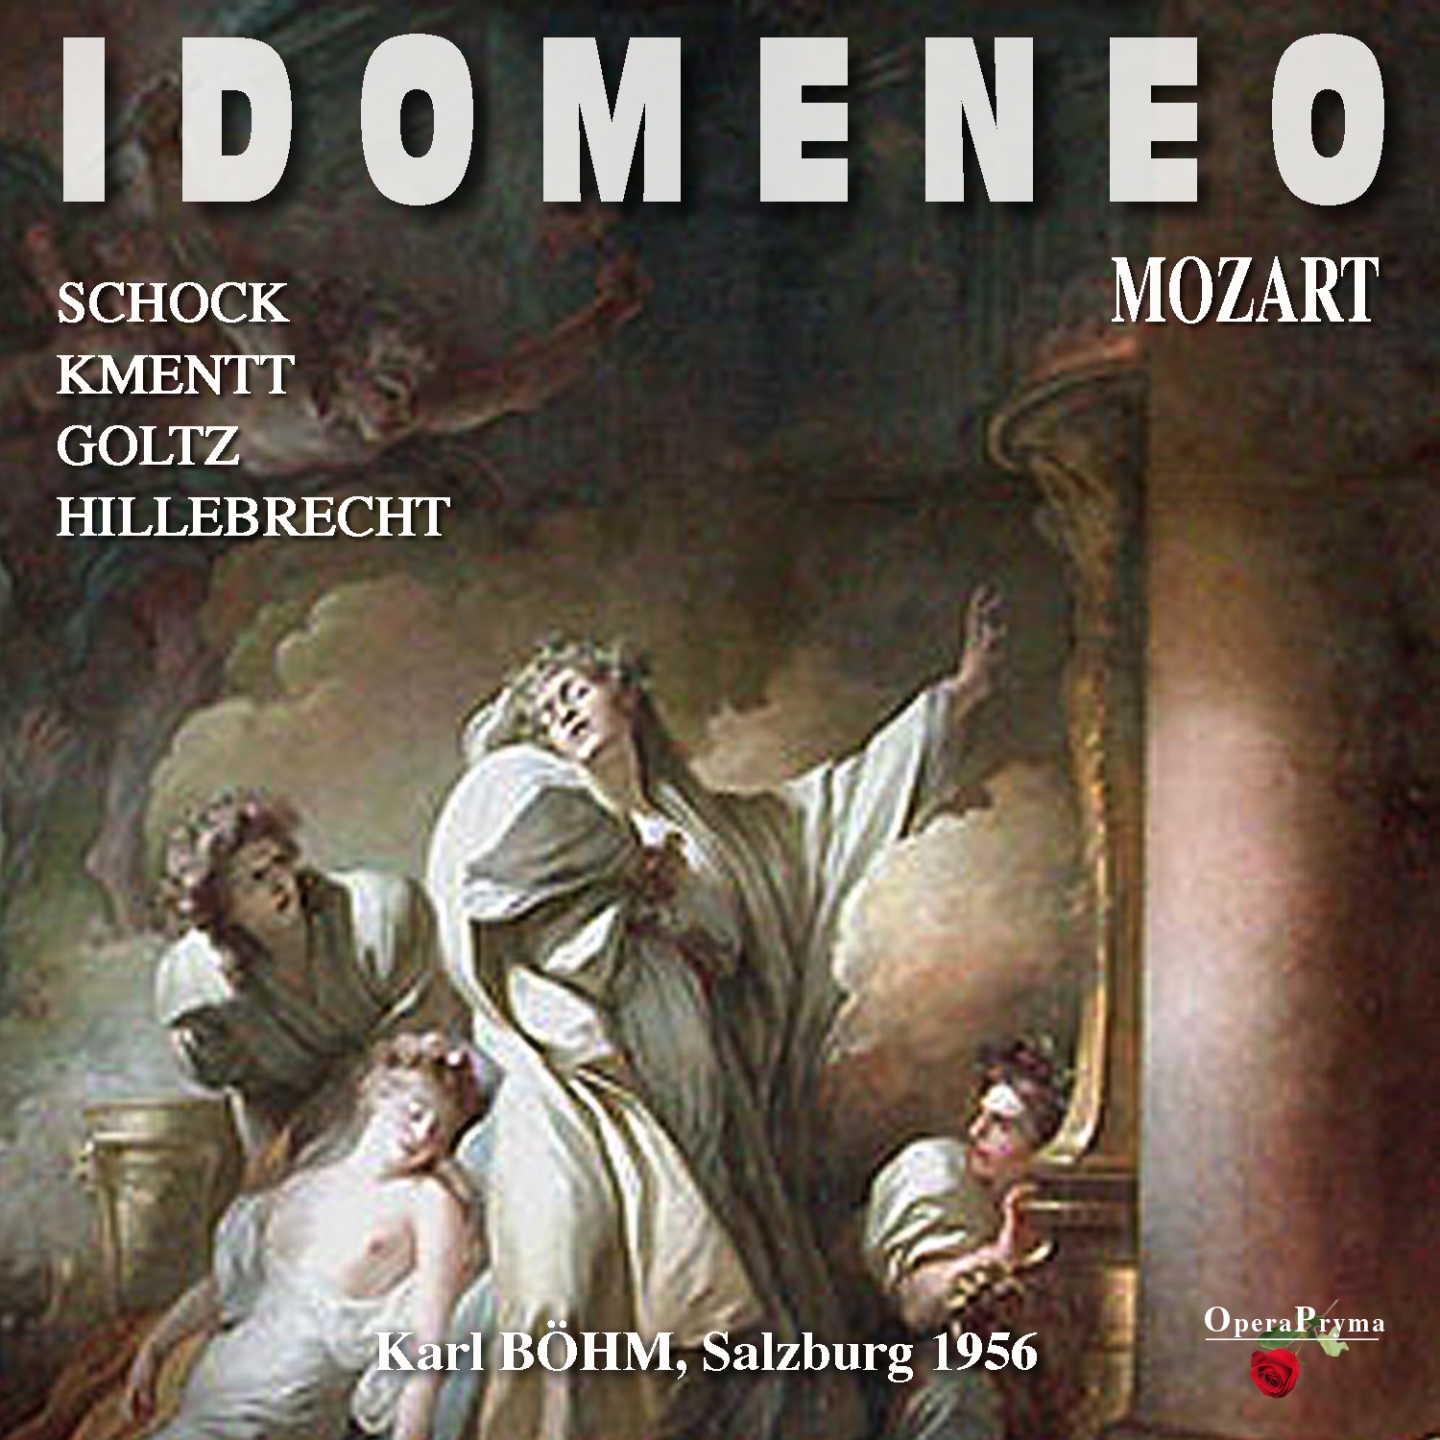 Idomeneo, K. 366, Act I: "Ecco, Idamante, ahimè!" (Ilia, Idamante)